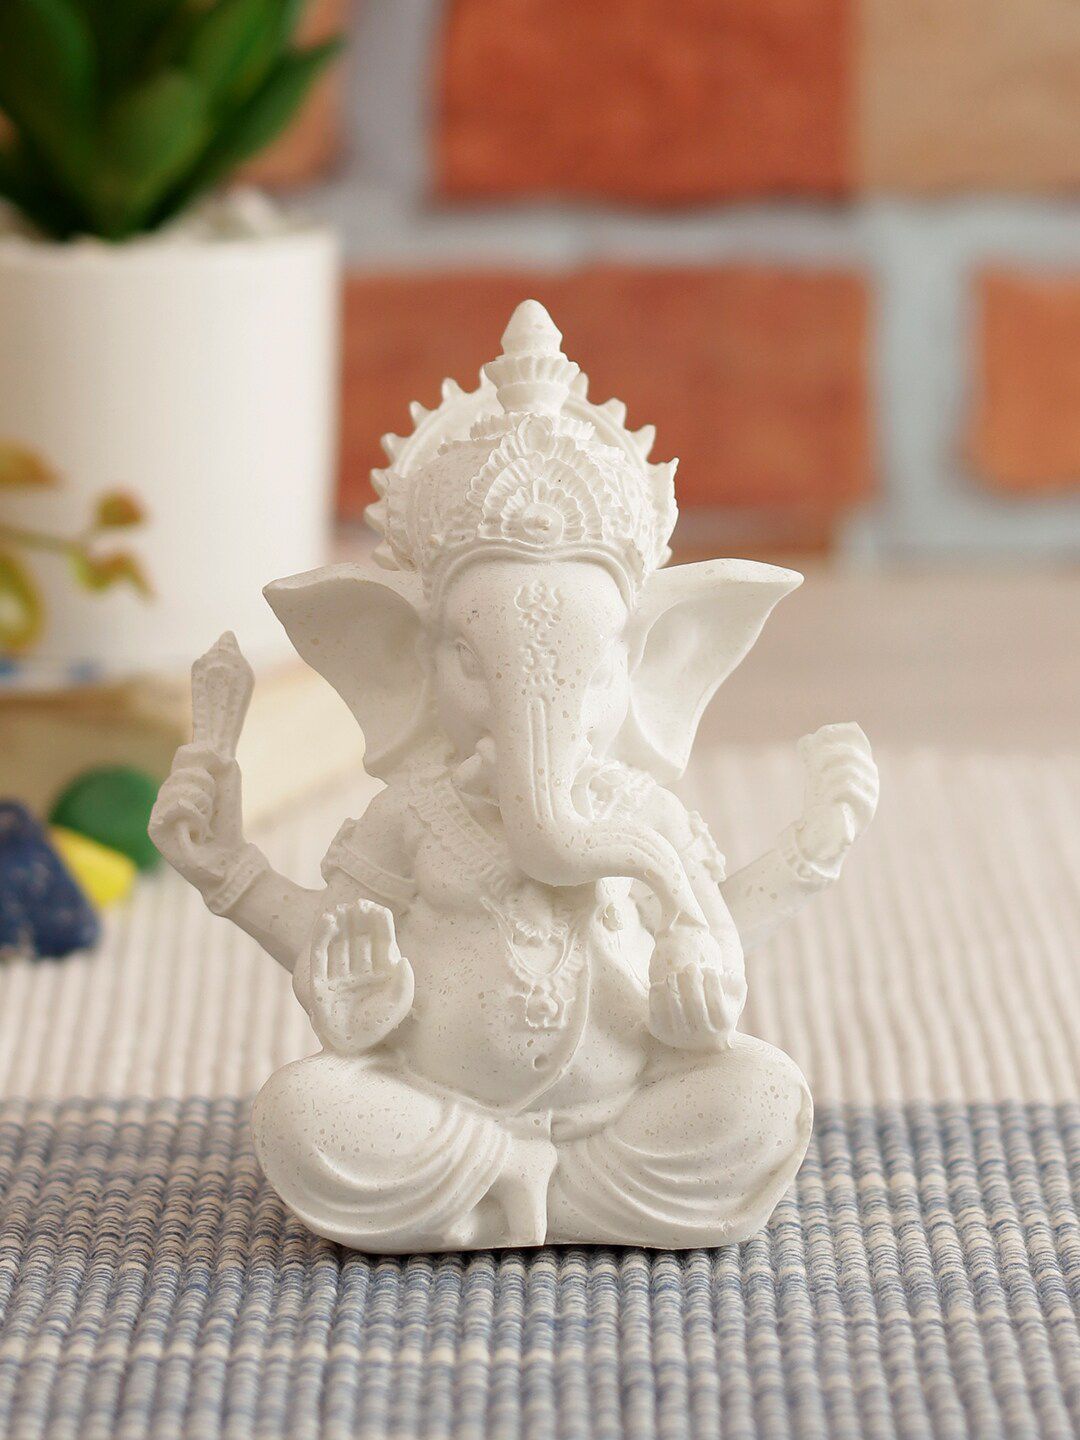 TAYHAA White Lord Ganesha Showpiece Price in India